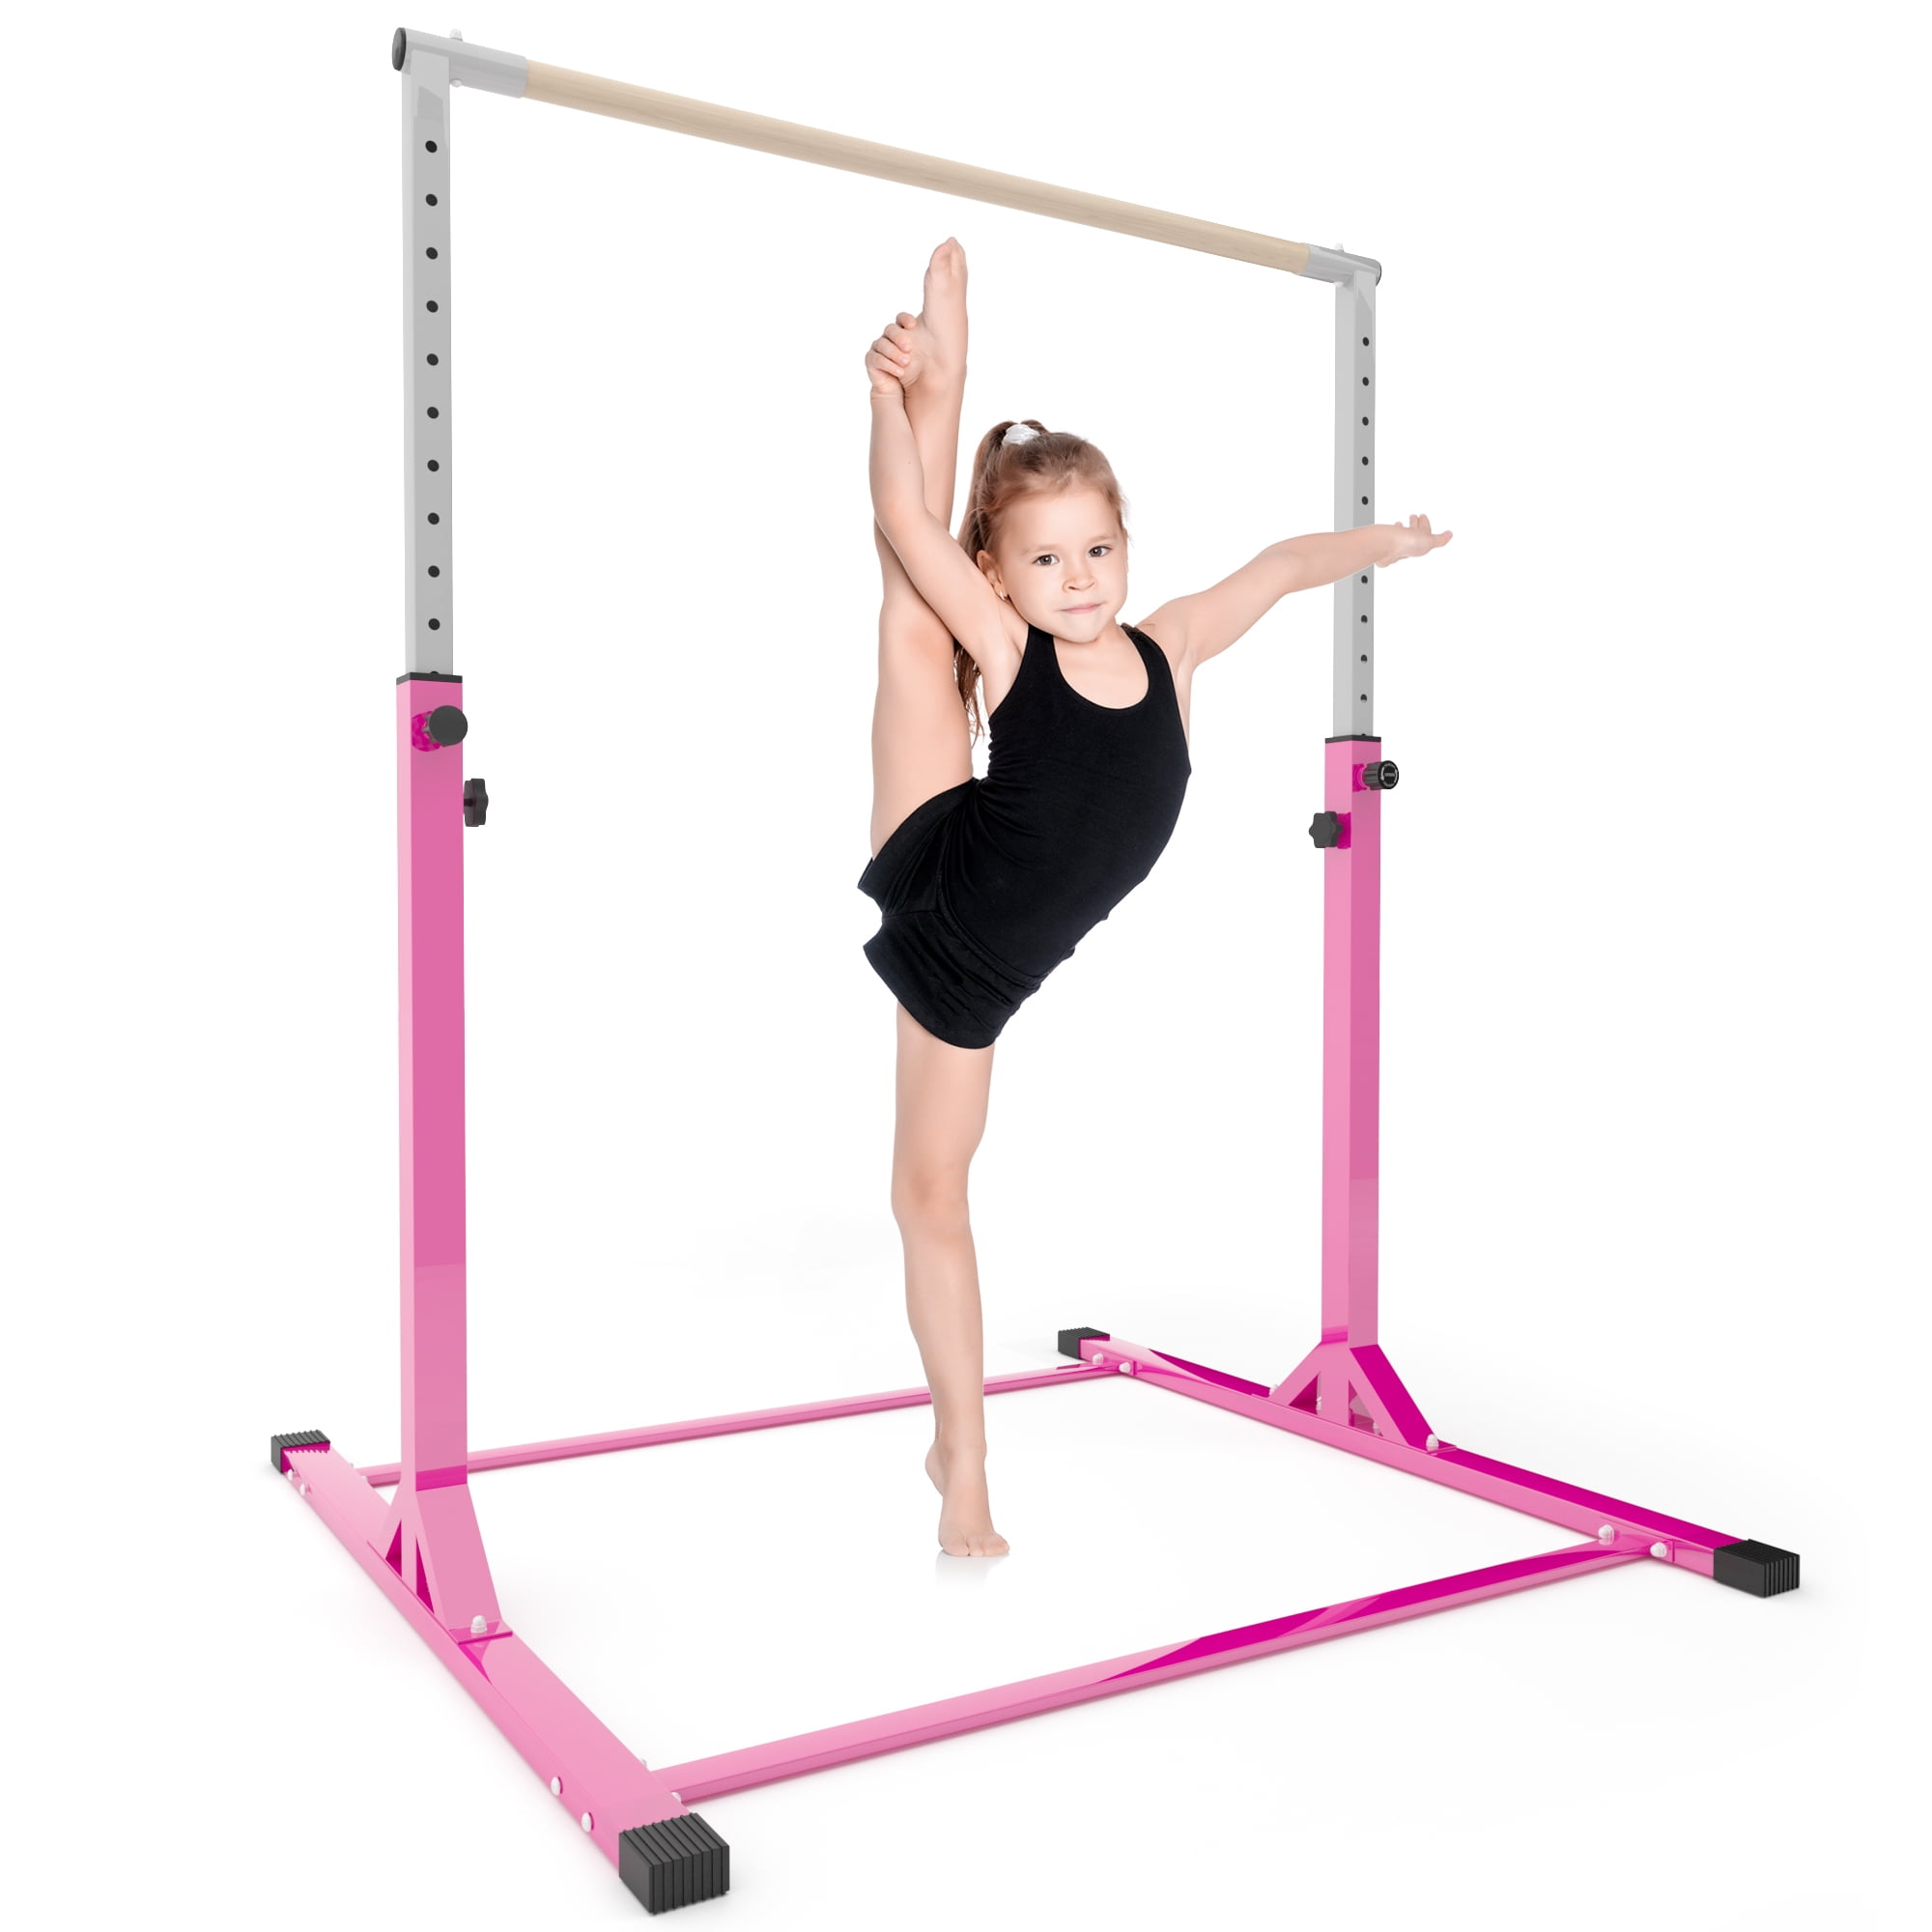 Ainfox Pink Gymnastics bar, Girls Gymnastic Training Equipment at